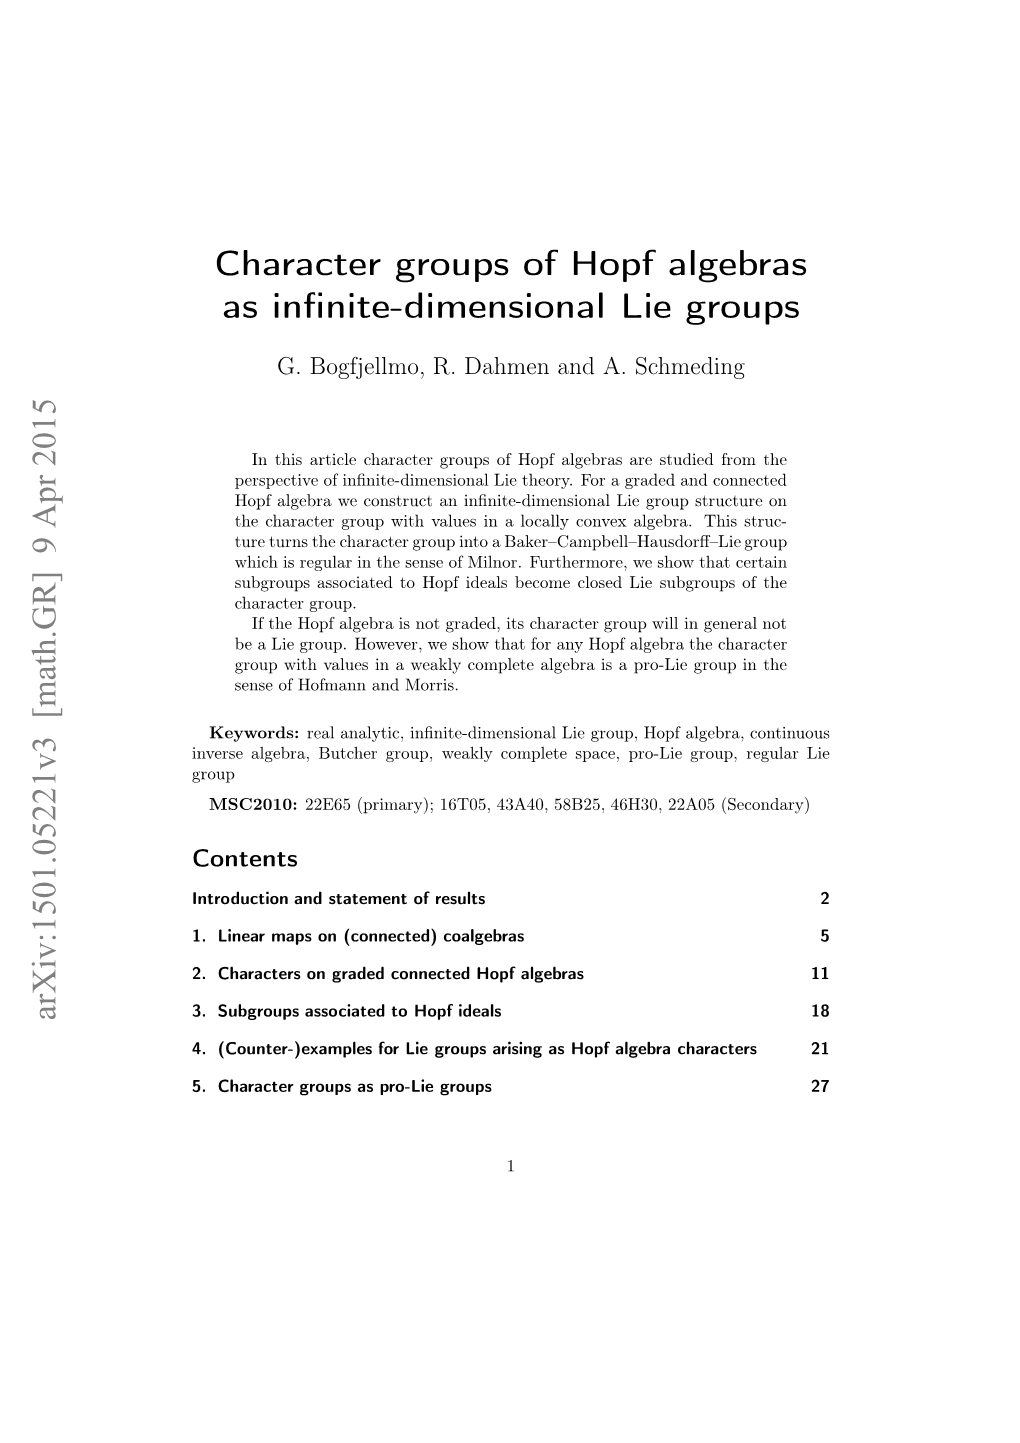 Character Groups of Hopf Algebras As Infinite-Dimensional Lie Groups